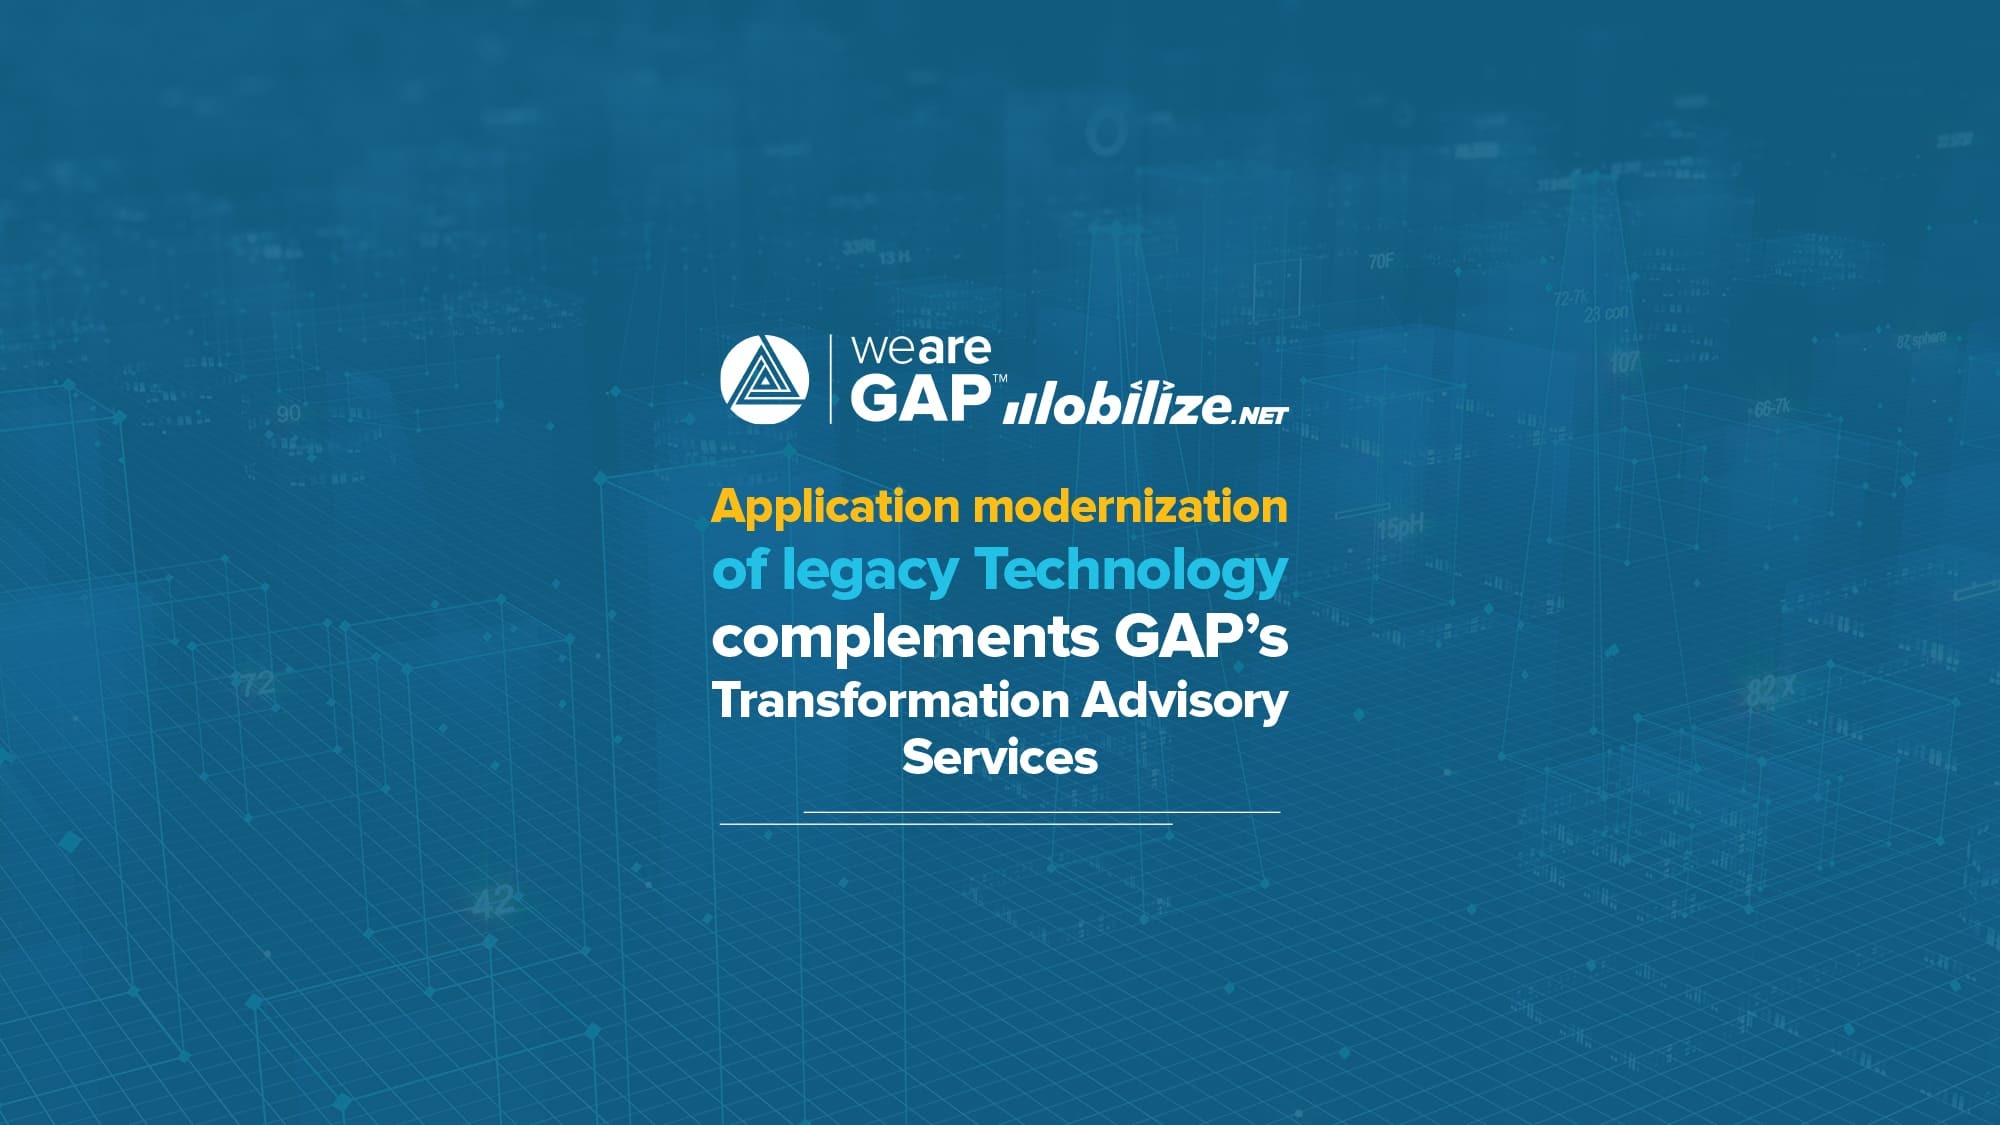 Growth Acceleration Partners Announces Intent to Acquire the Application Migration Business Unit of Mobilize.Net